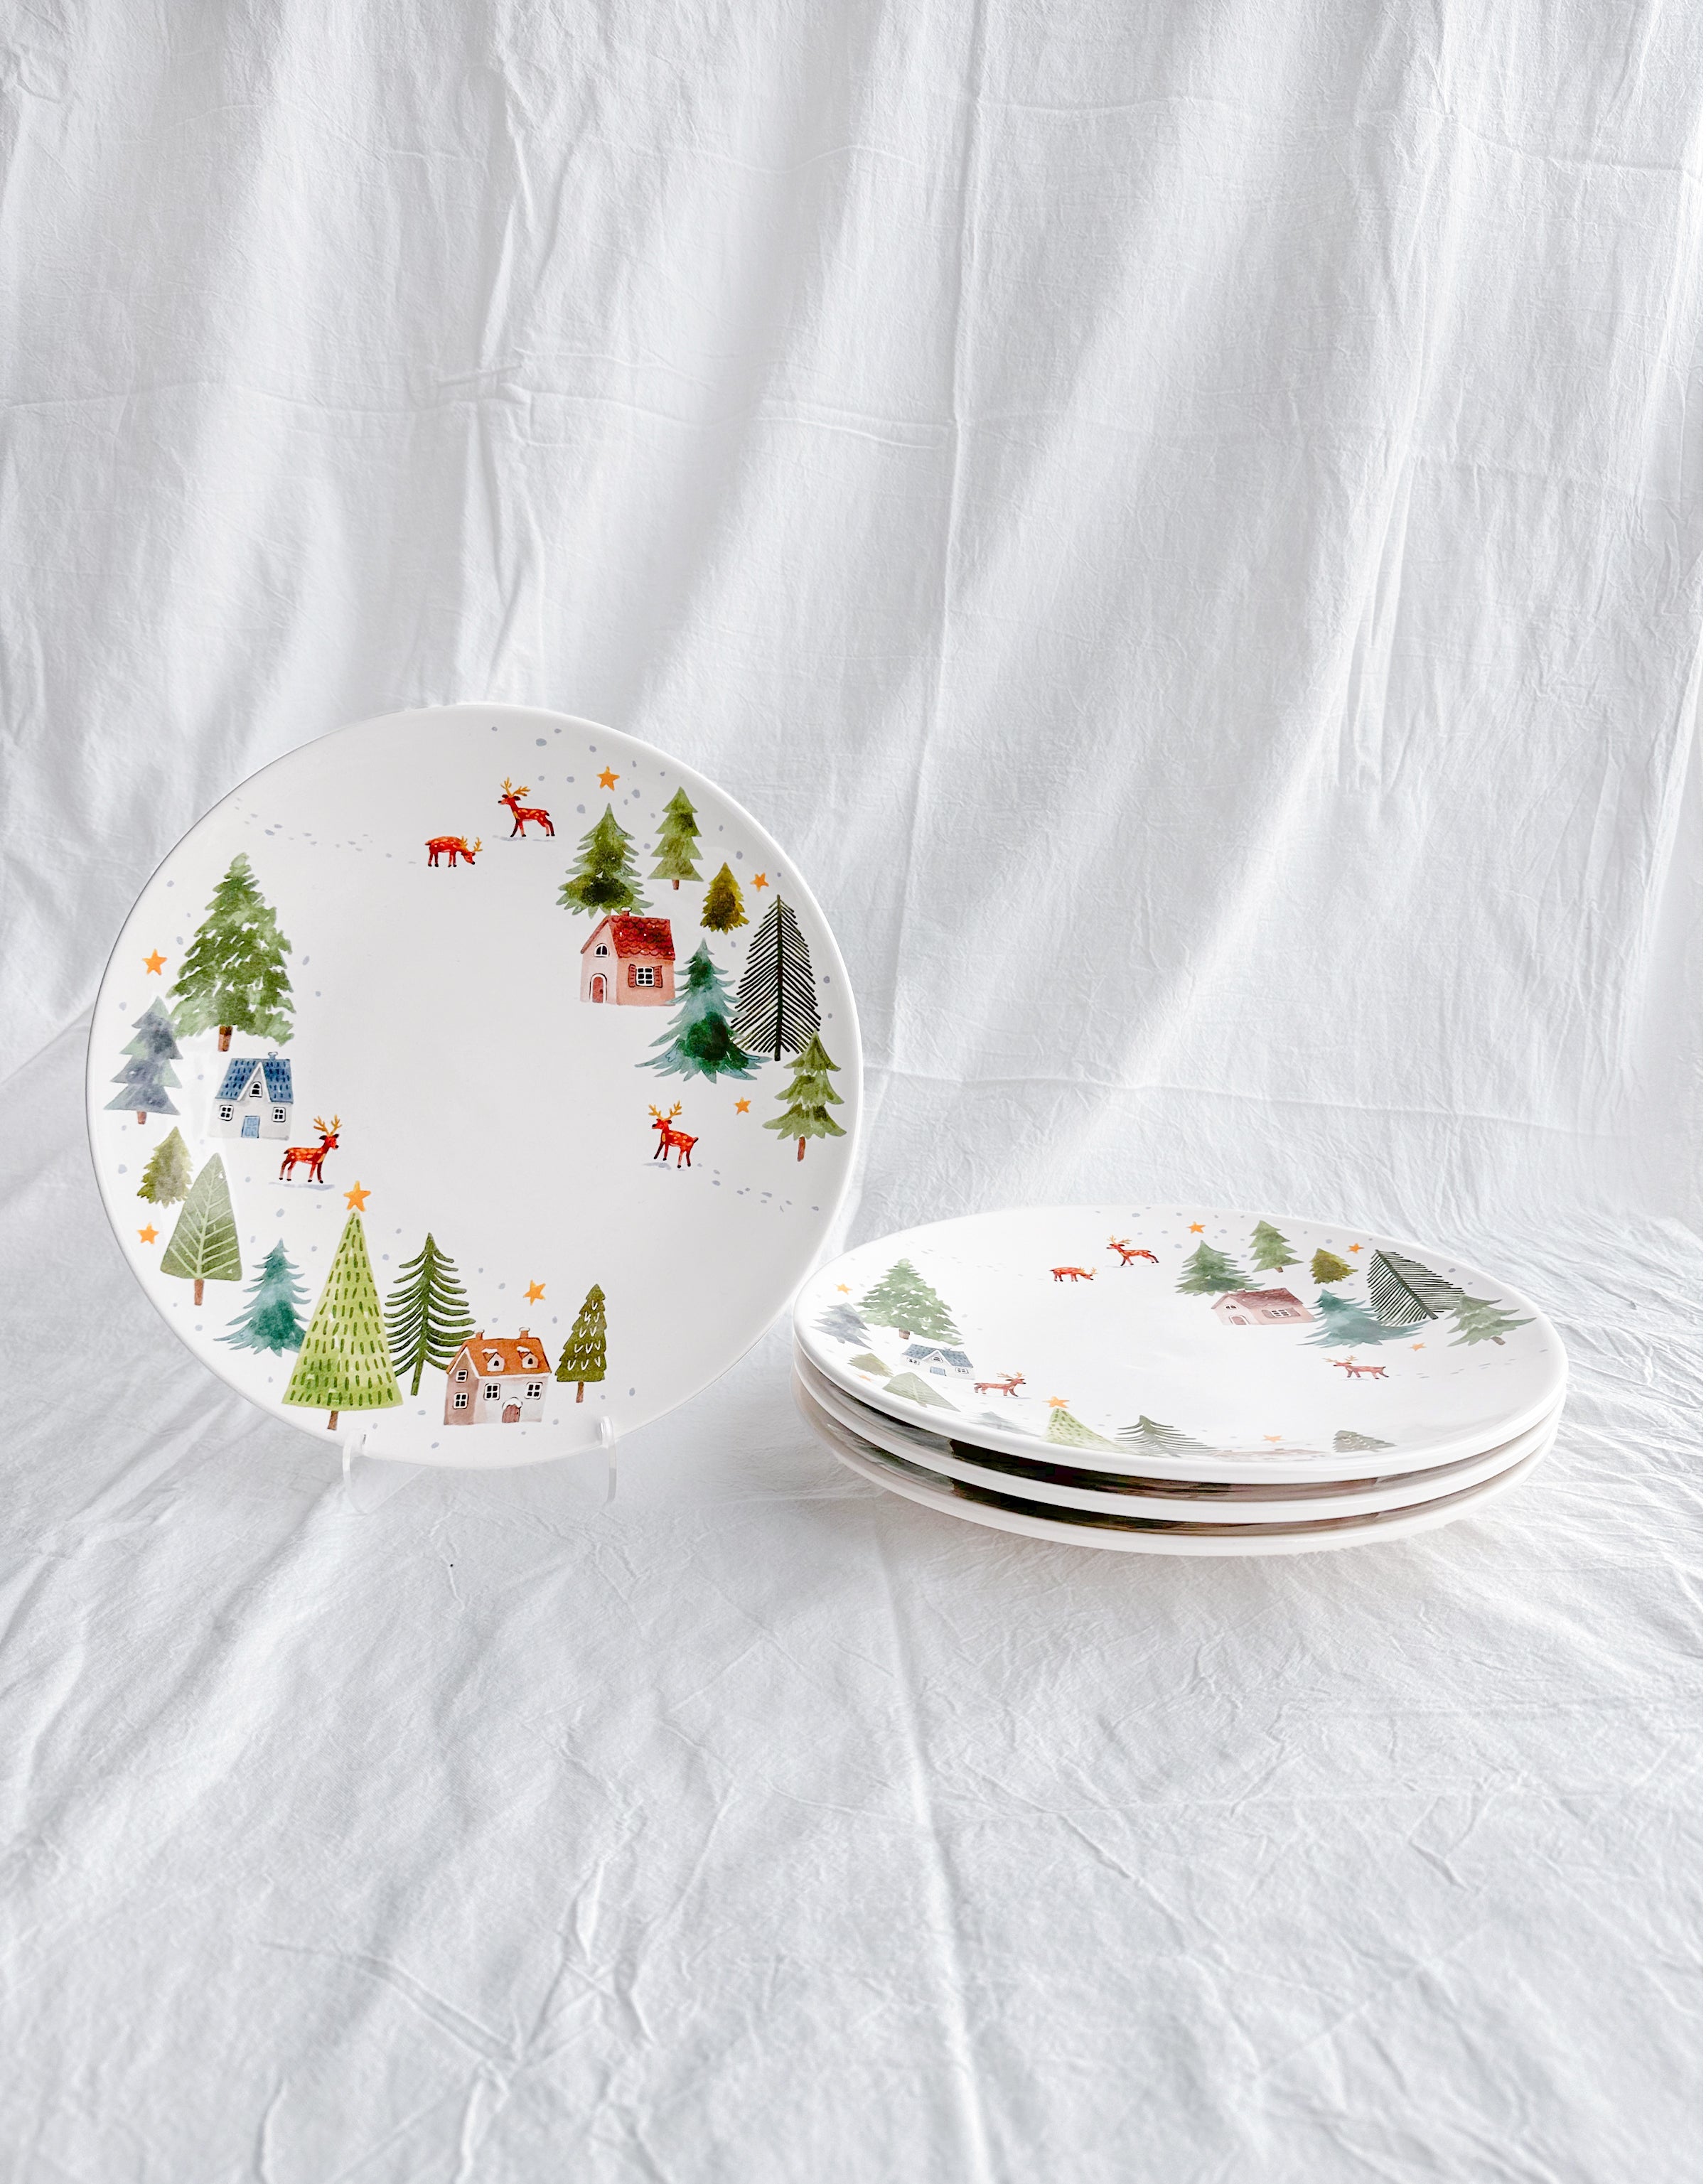 Enchanted Winter Wonderland Dinner Plates, Set of 4